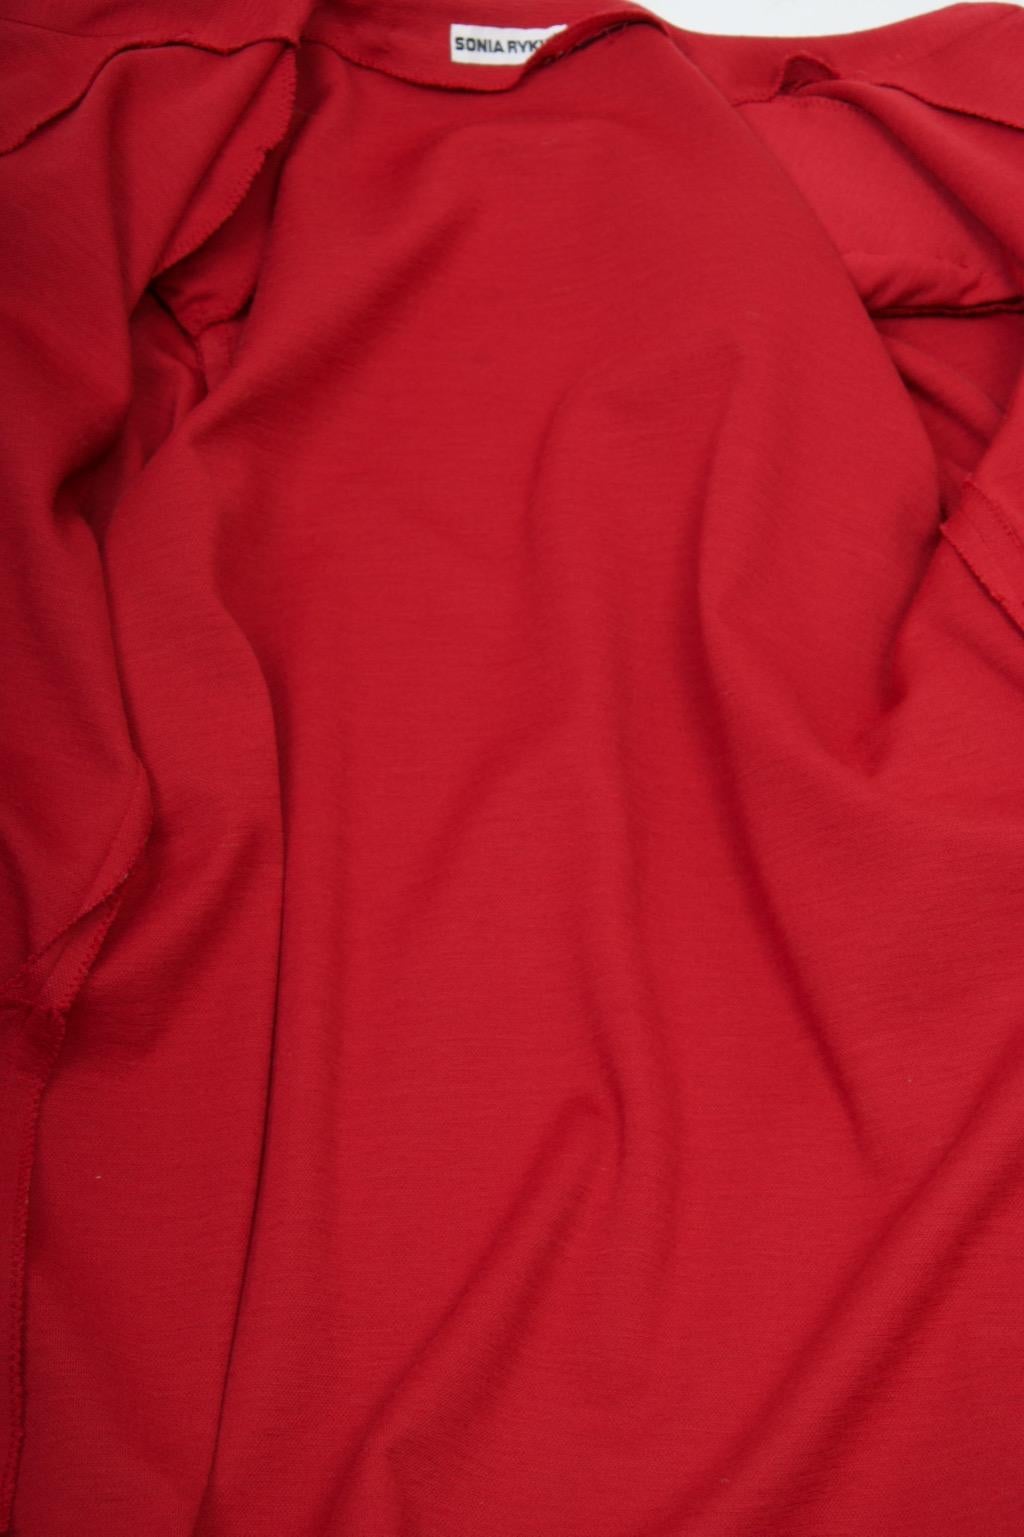 Sonia Rykiel Red Knit Coat/Dress For Sale 4